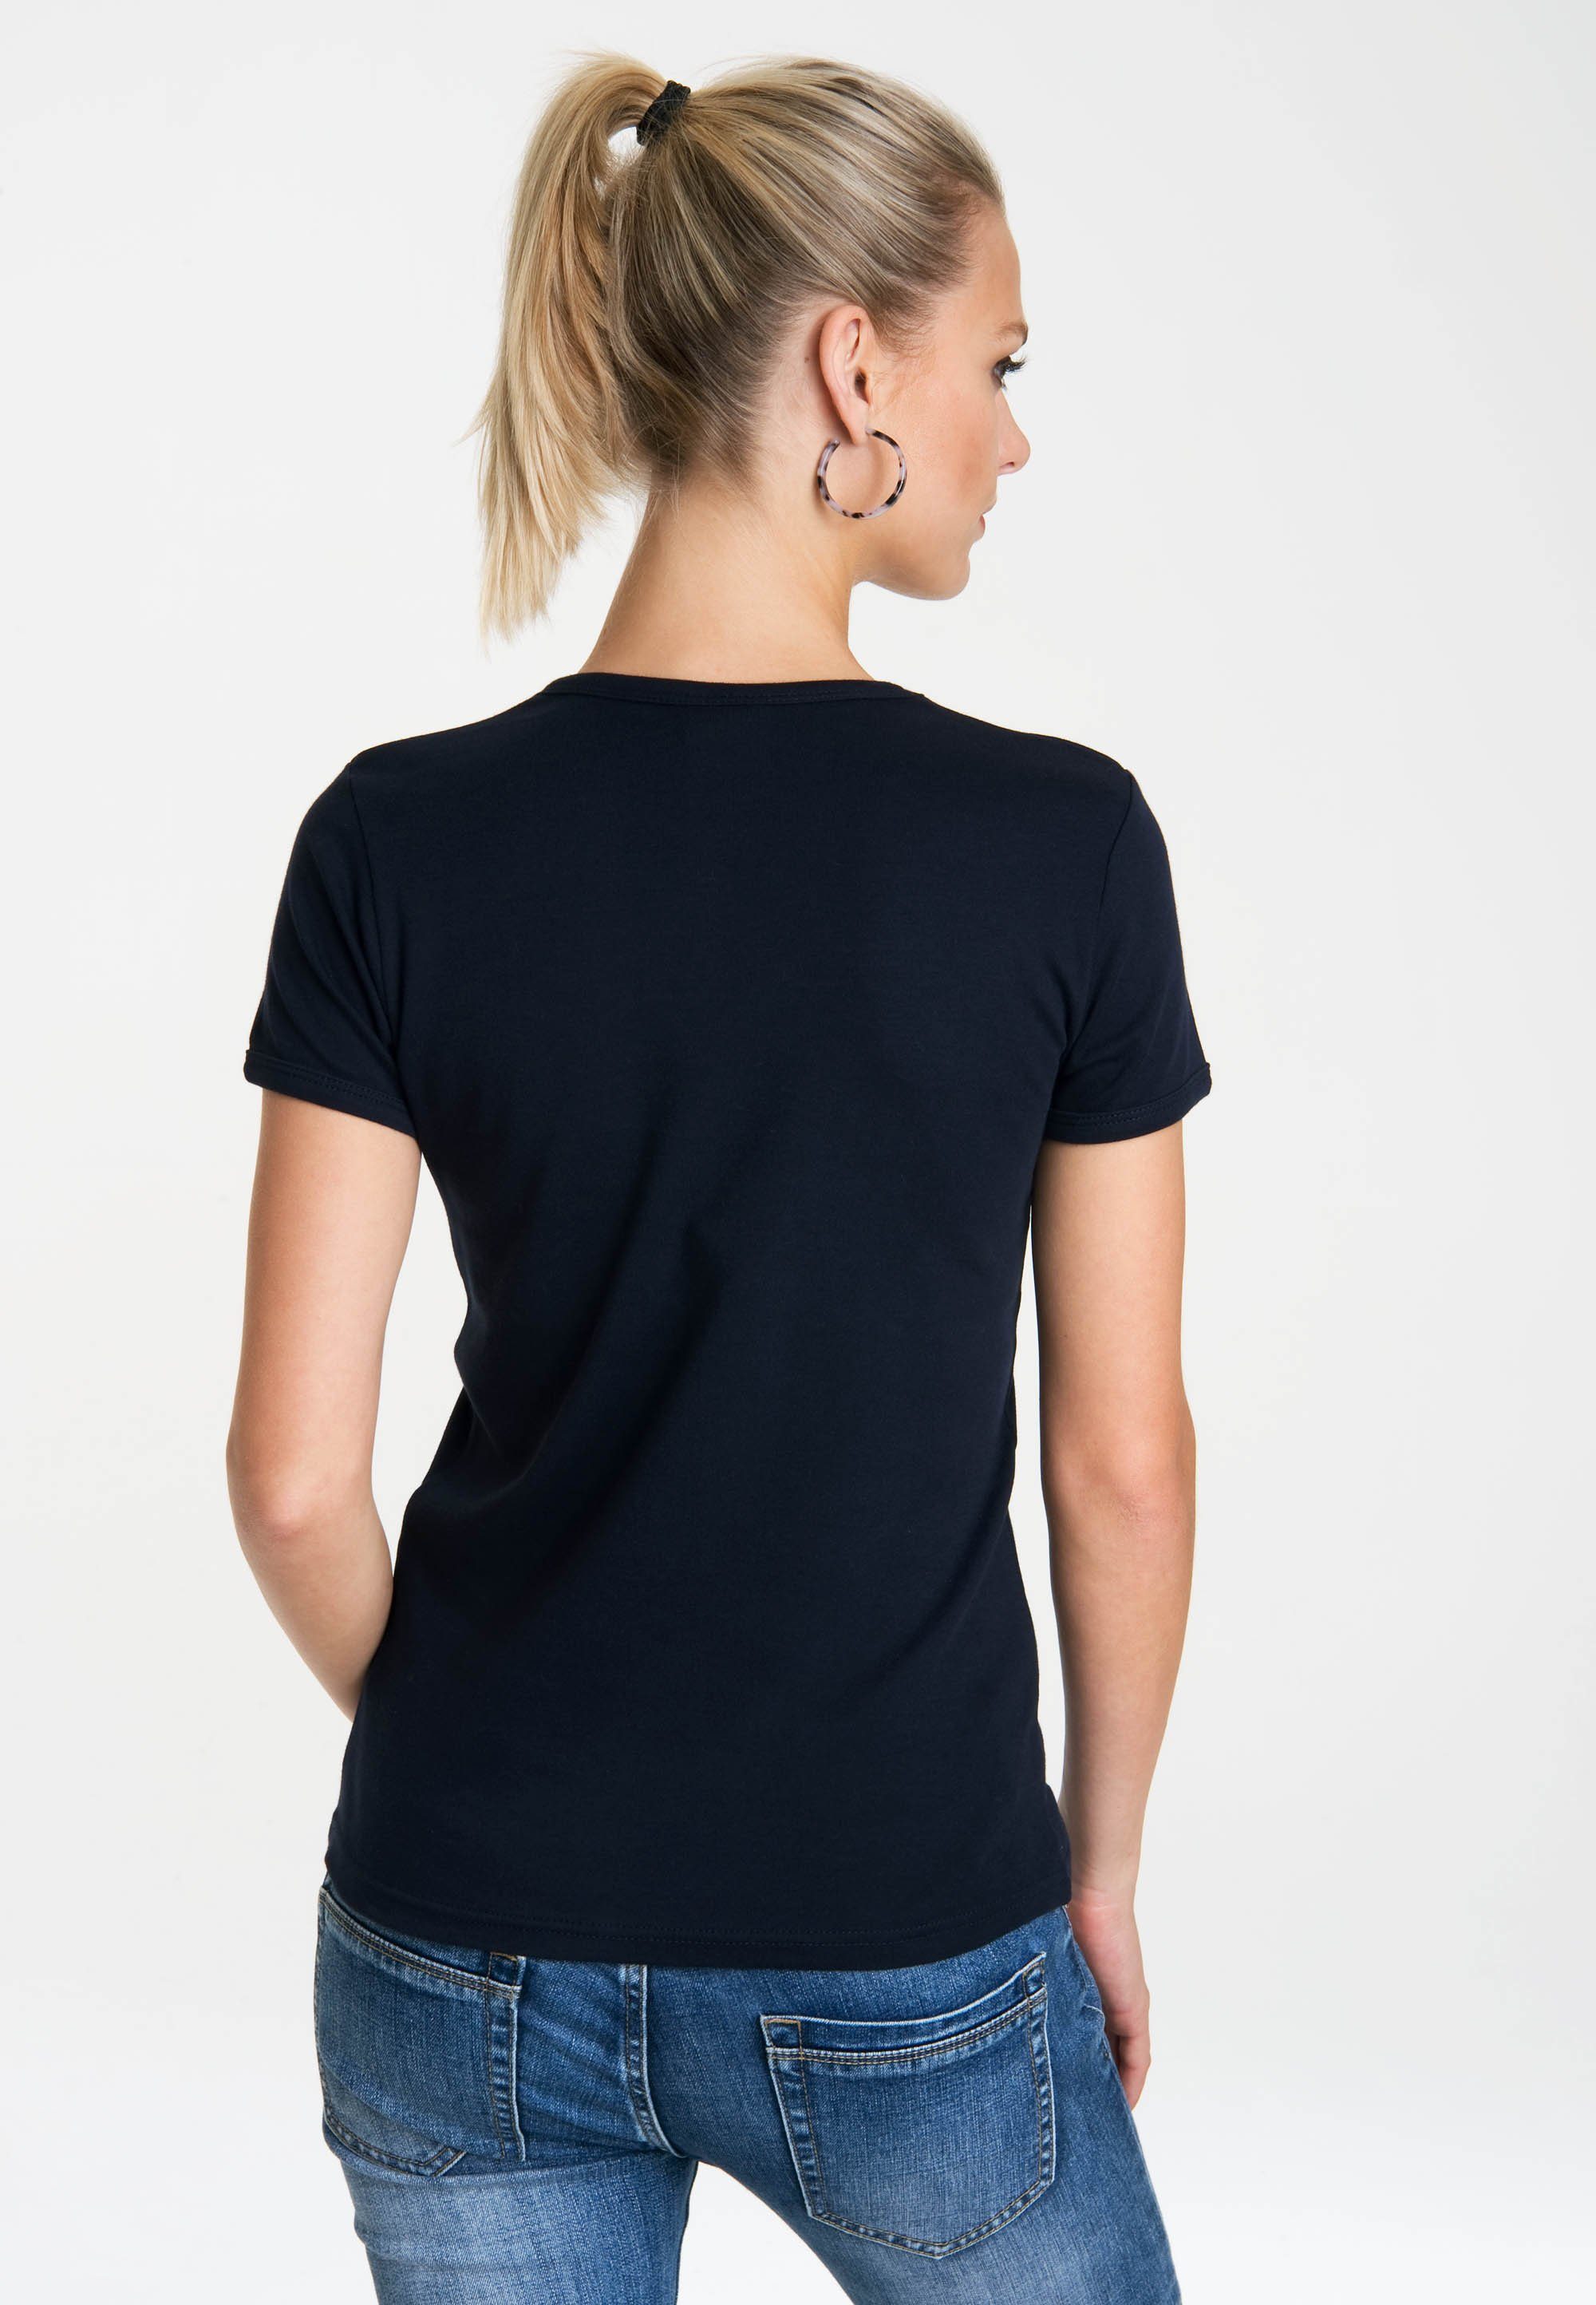 Tom T-Shirt Originaldesign Jerry LOGOSHIRT lizenziertem mit schwarz &